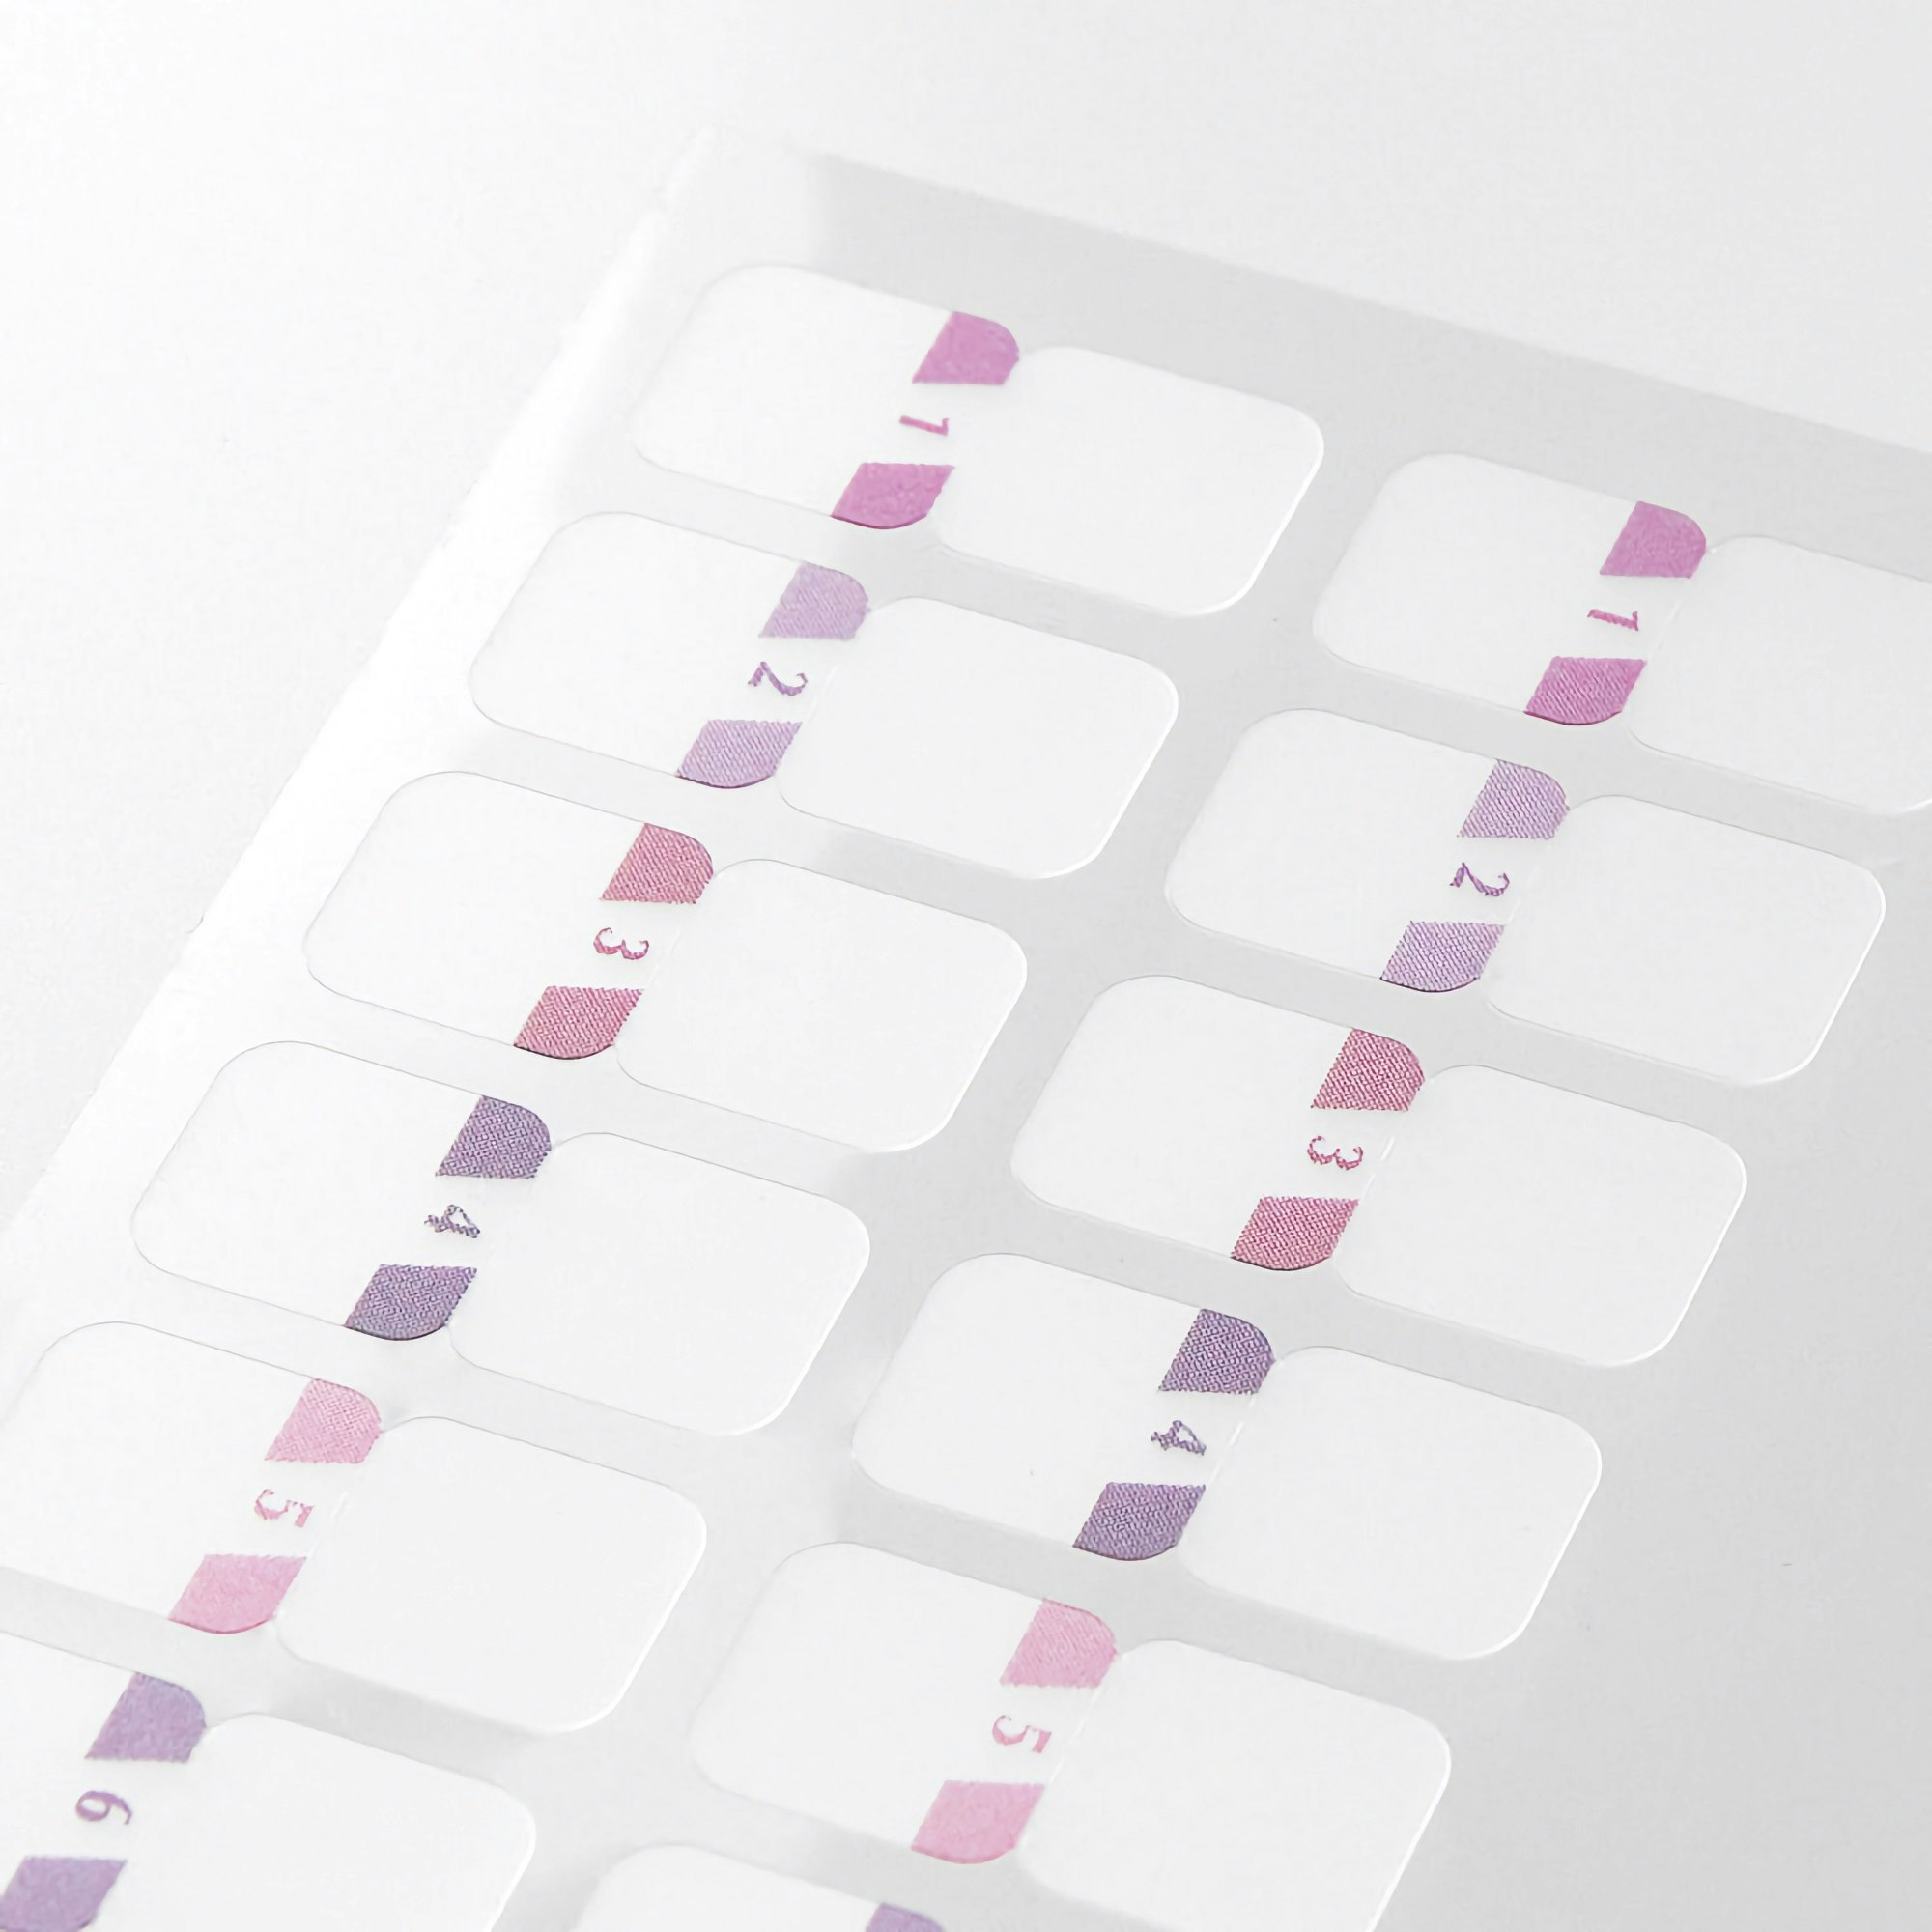 Midori Index Label Chiratto Stickers Number Pink